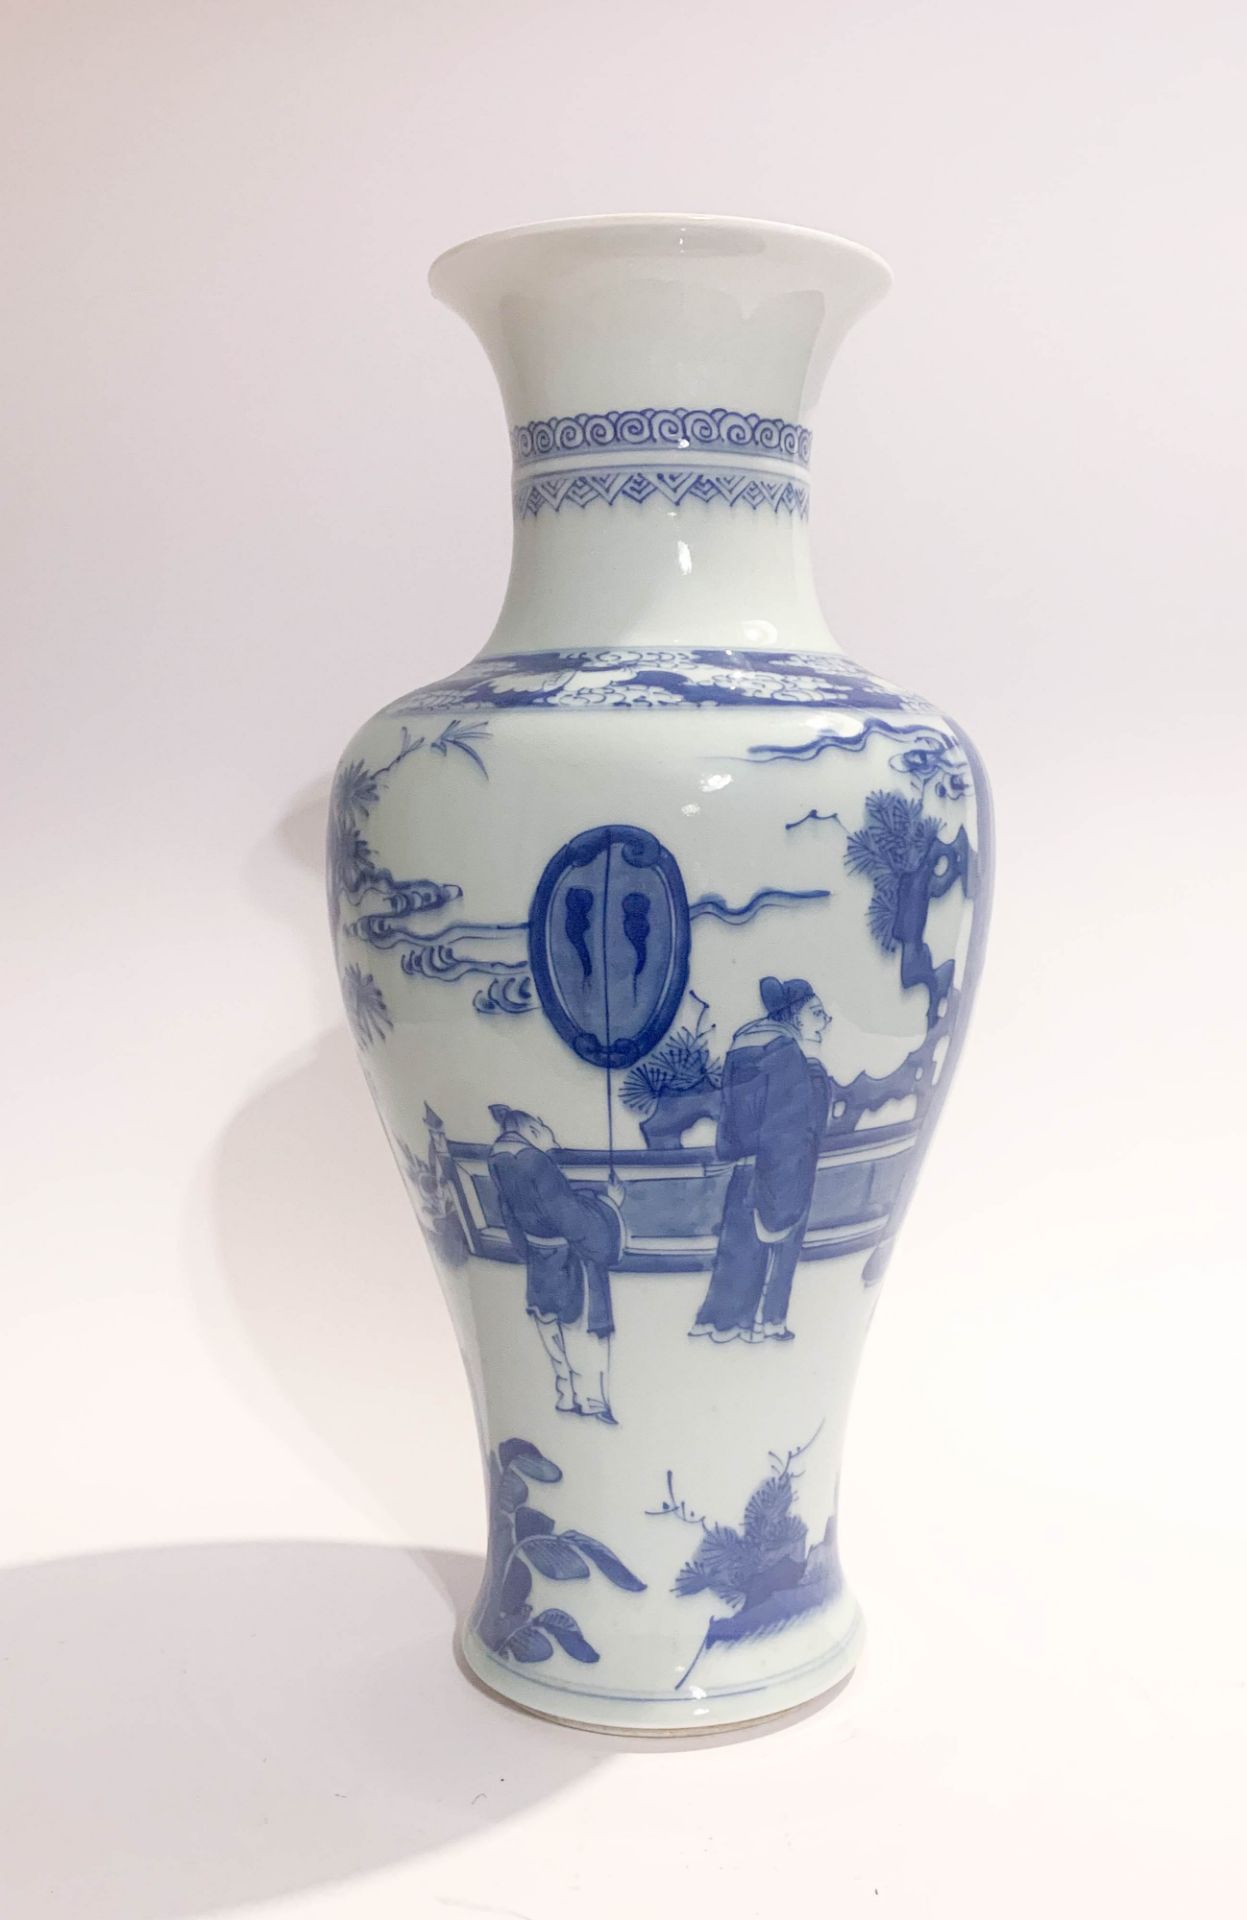  Floor vase China Qing dynasty 19th century - Image 2 of 11